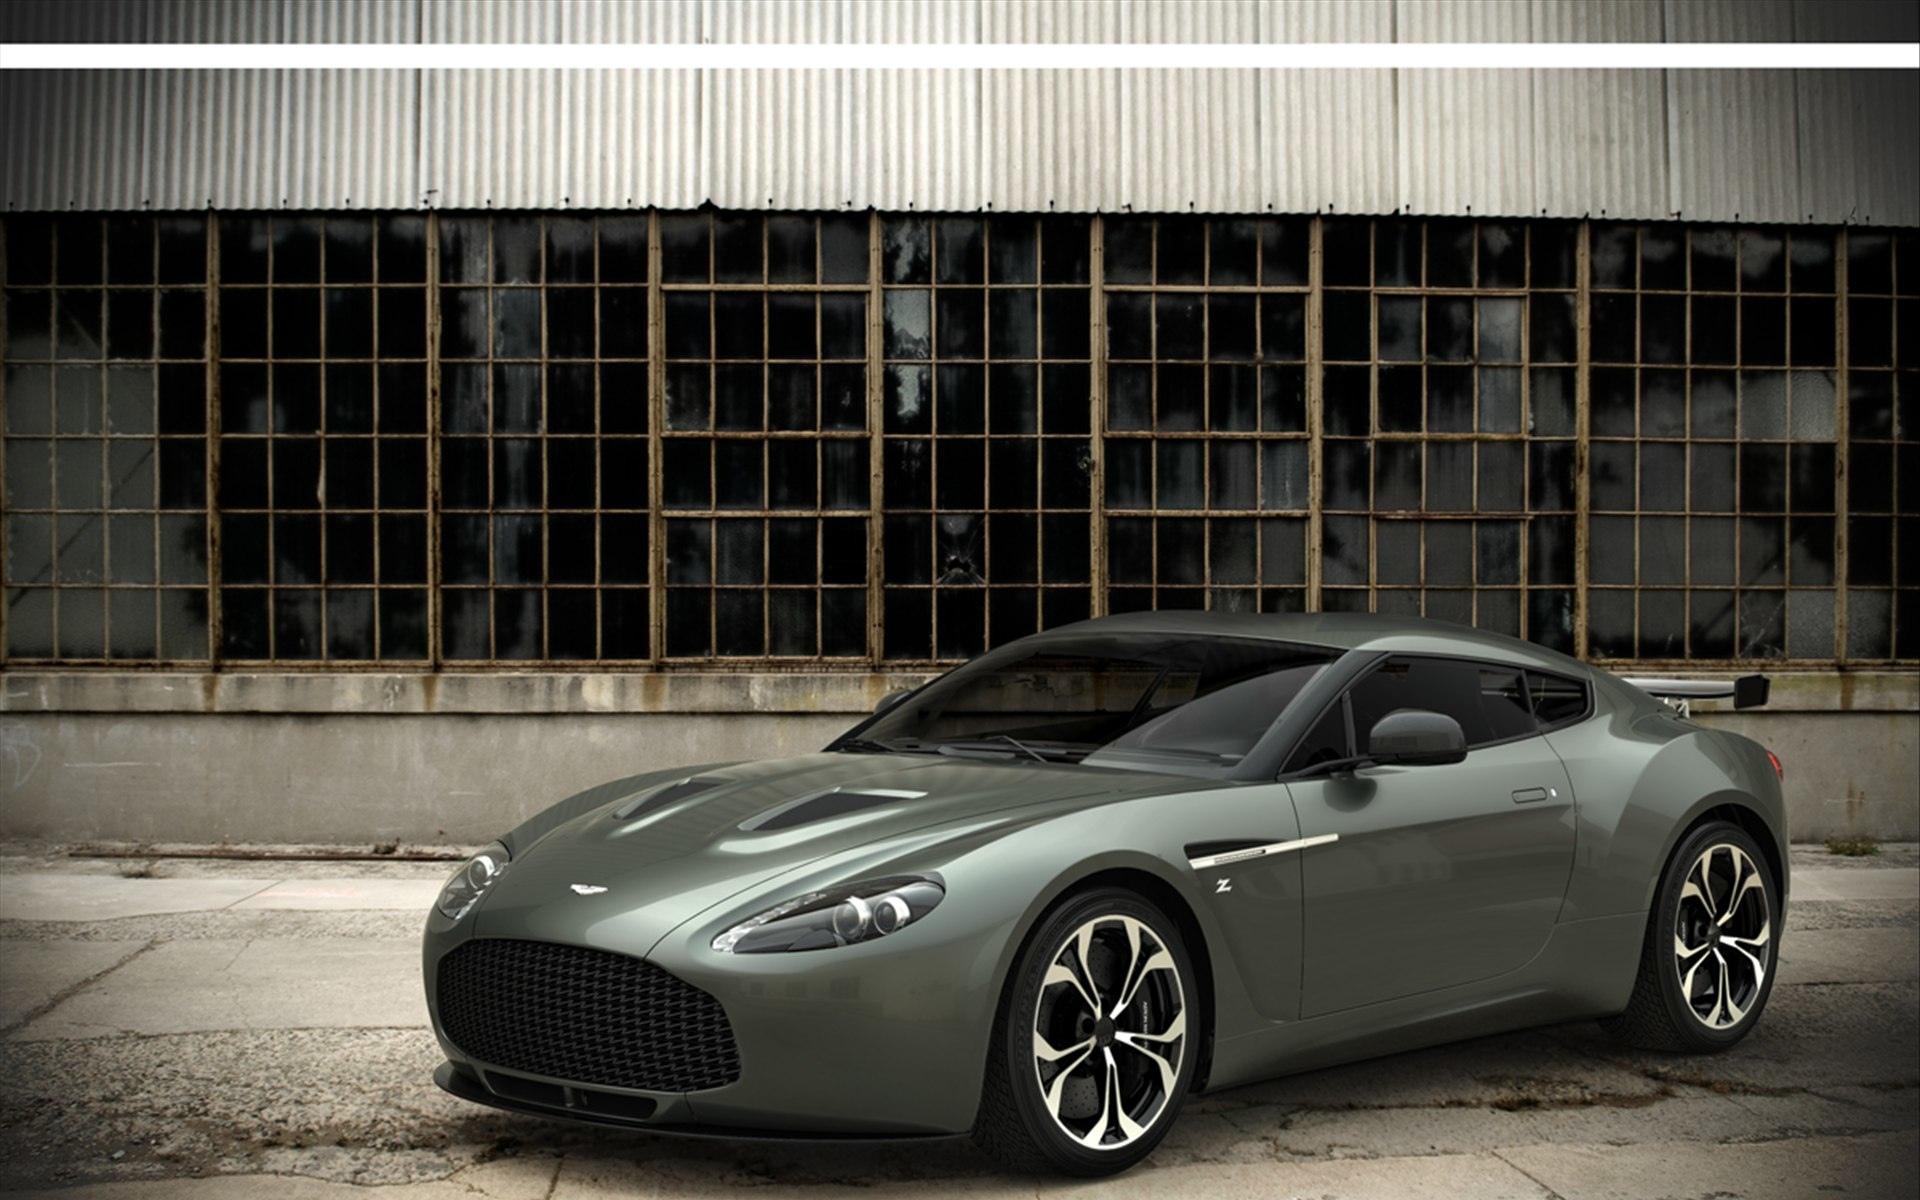 Aston Martin V12 Zagato wallpapers HD quality